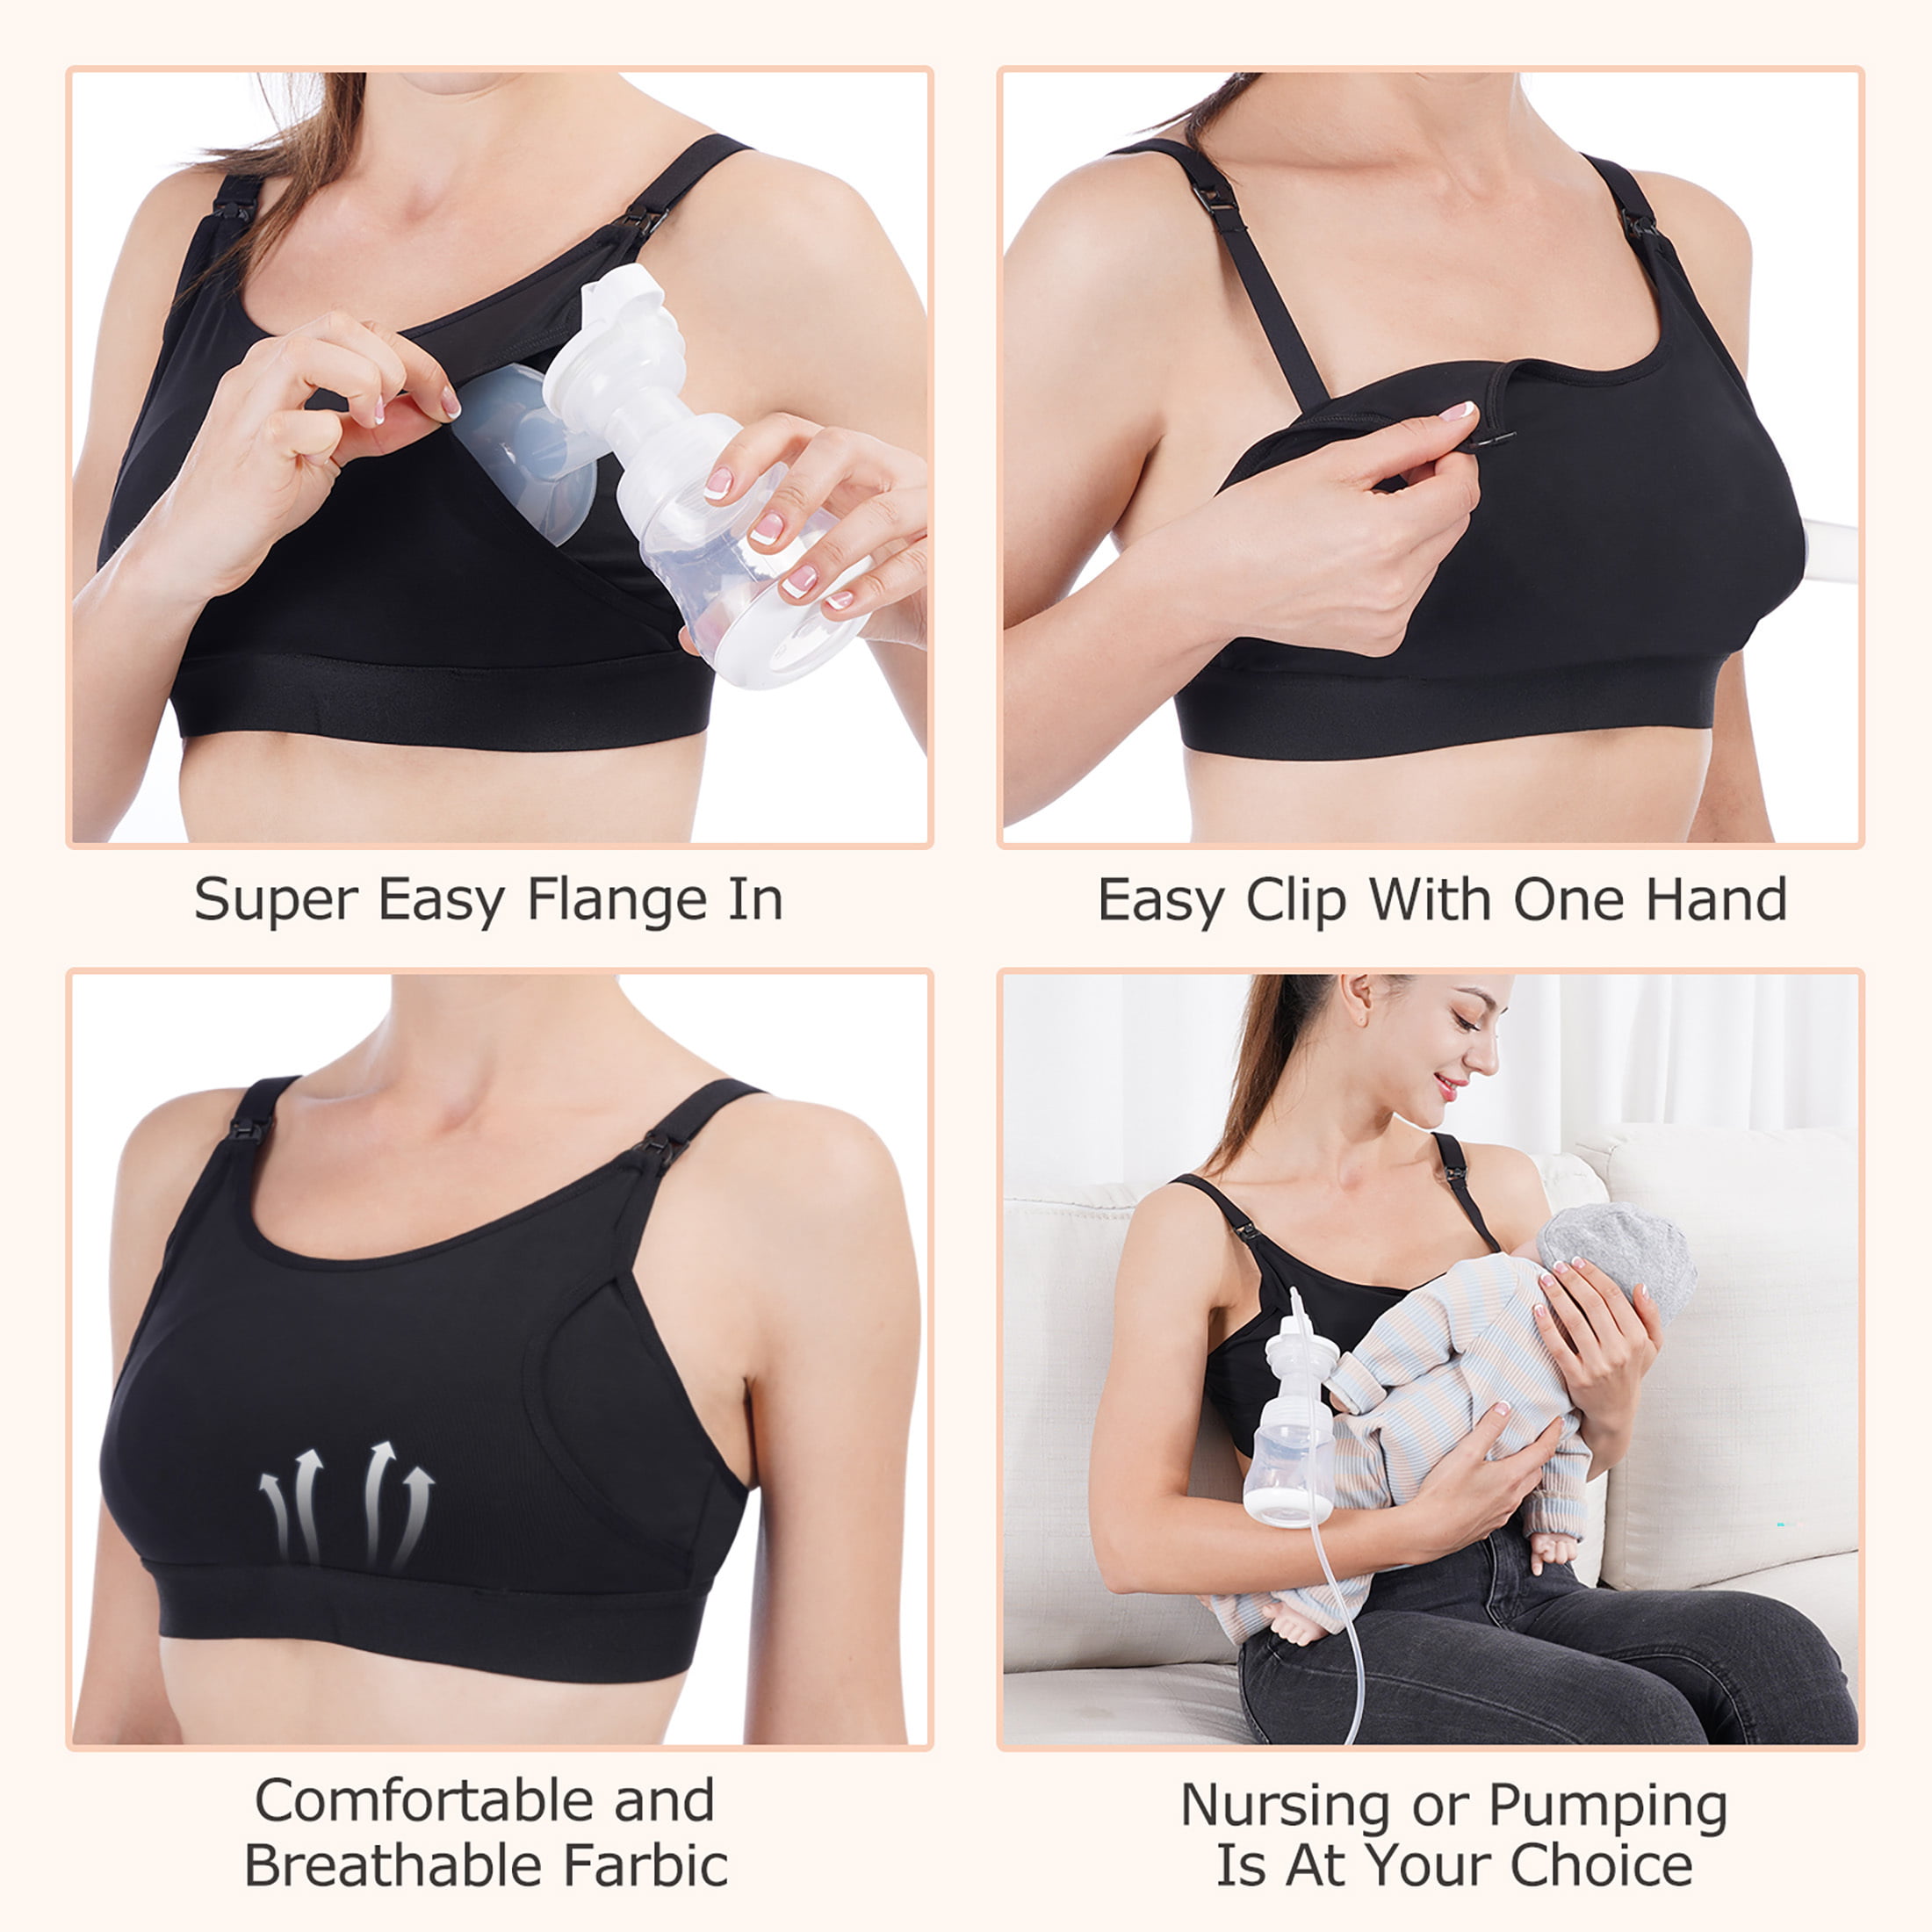 Momcozy Hands Free Pumping Bra, Adjustable Breast-Pumps